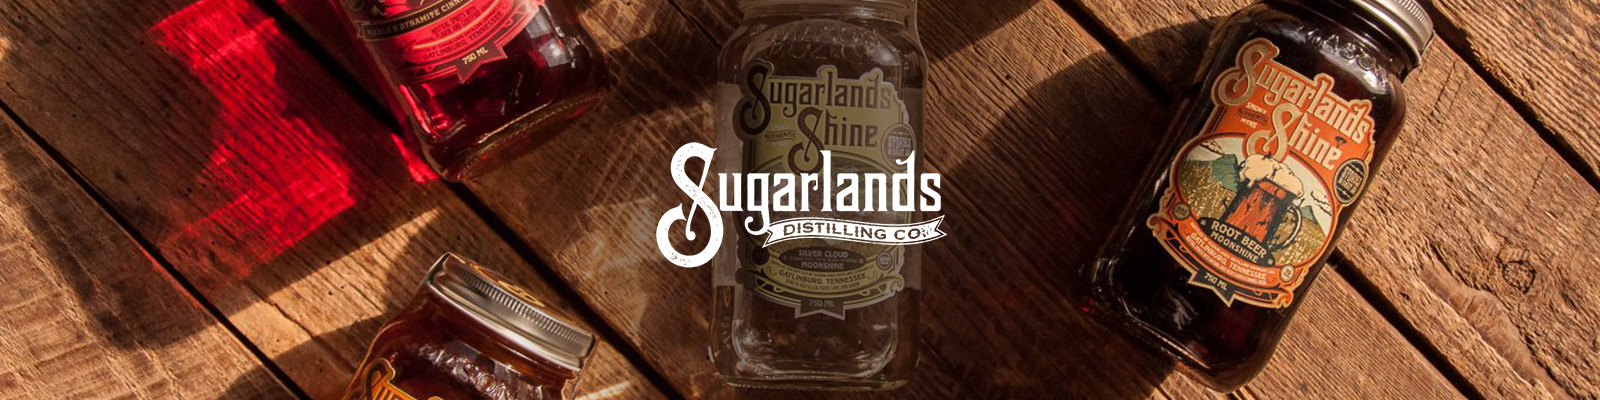 Sugarlands